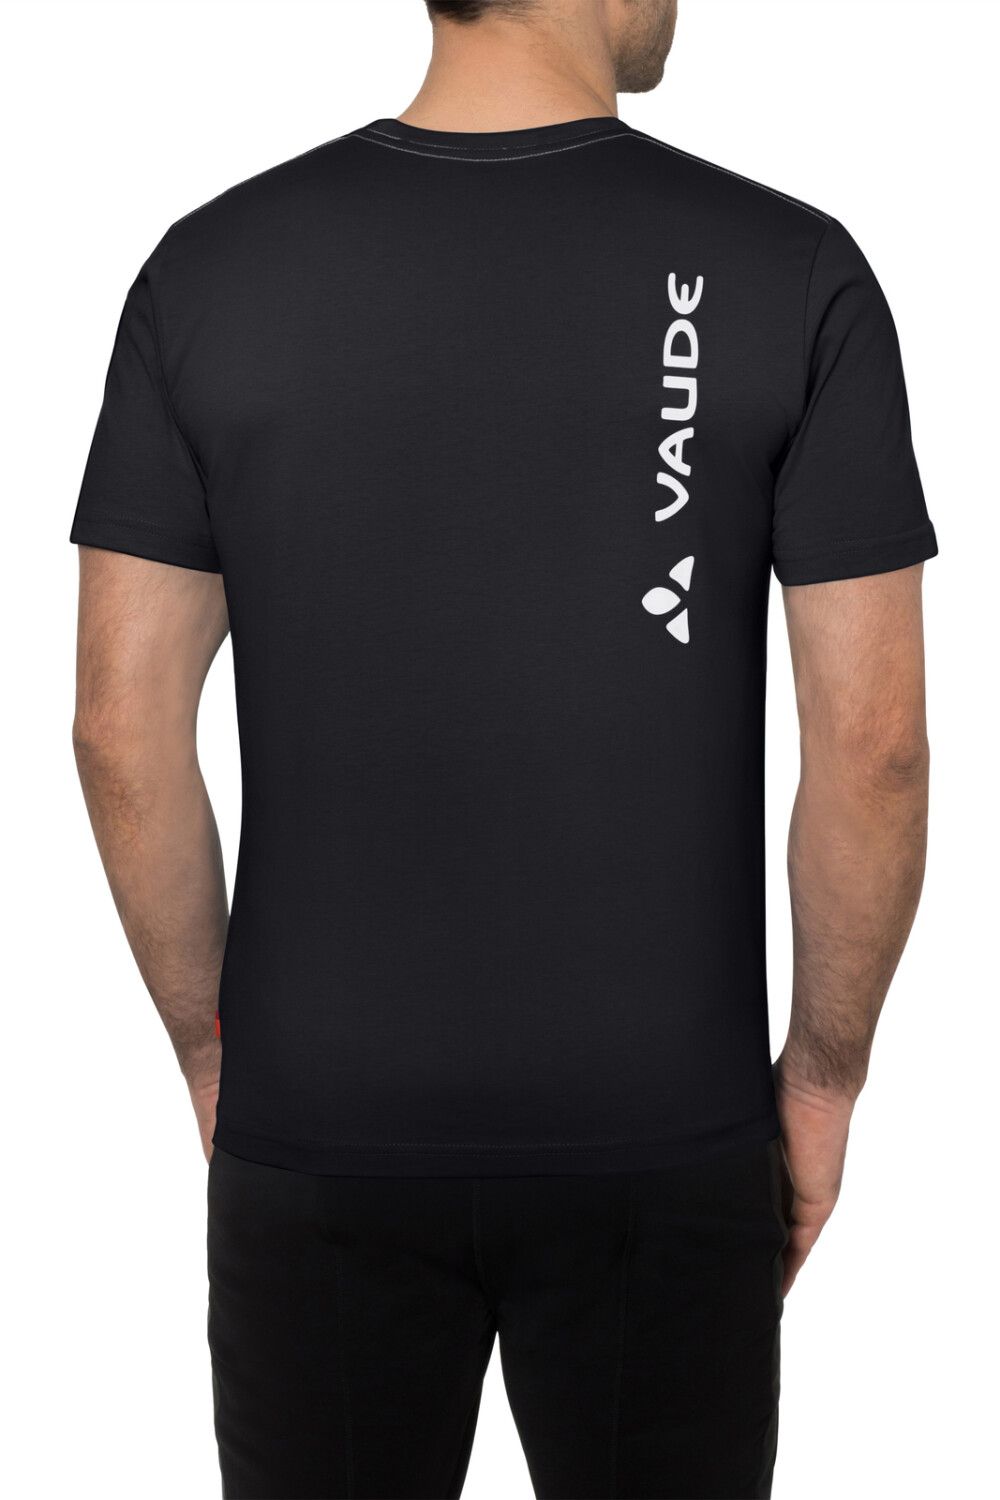 VAUDE Men's Brand T-Shirt (Bild 11)